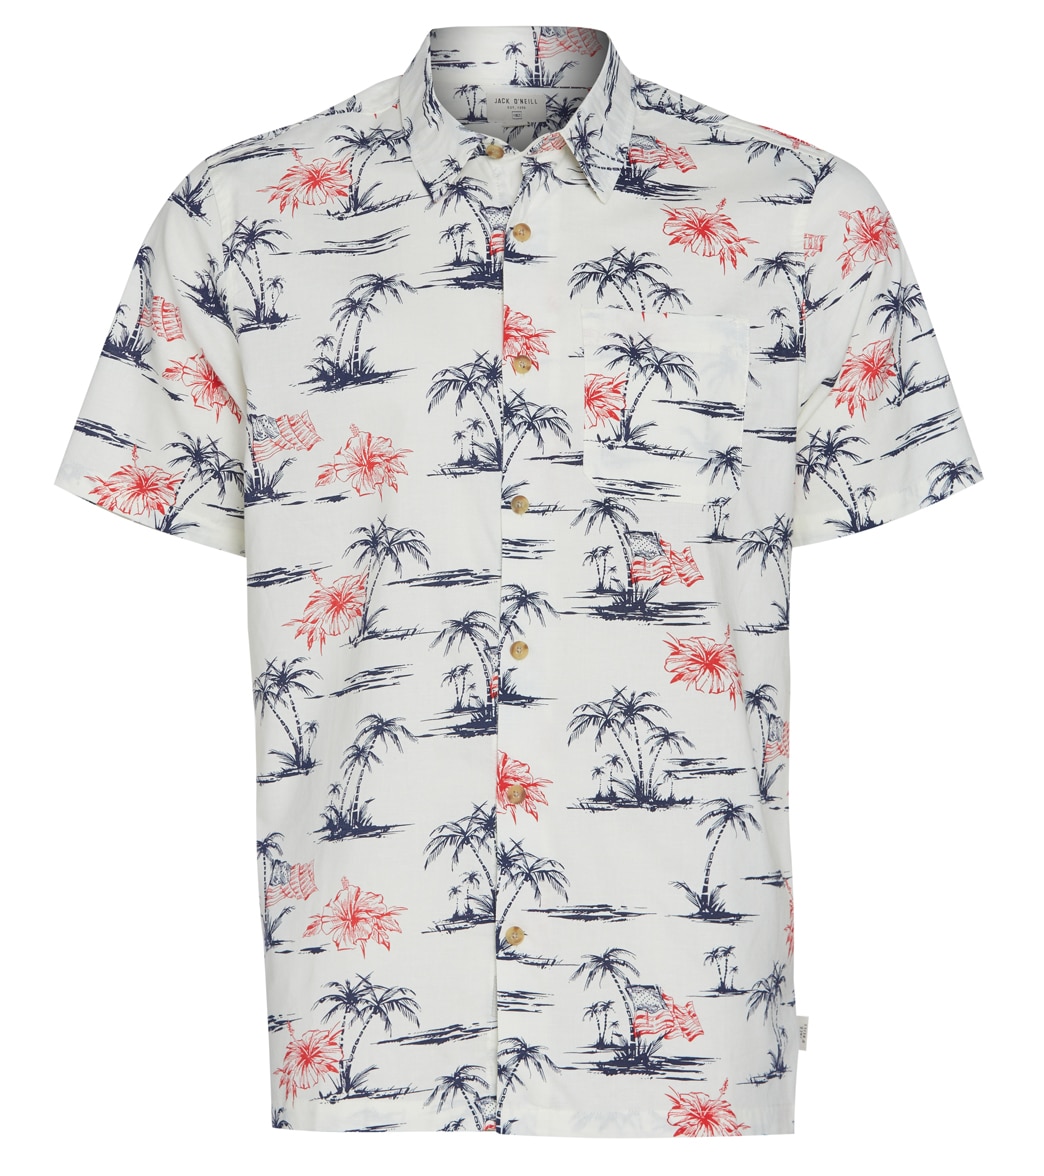 O'neill Men's United Shores Short Sleeve Button Up Shirt - Cream Large Cotton - Swimoutlet.com